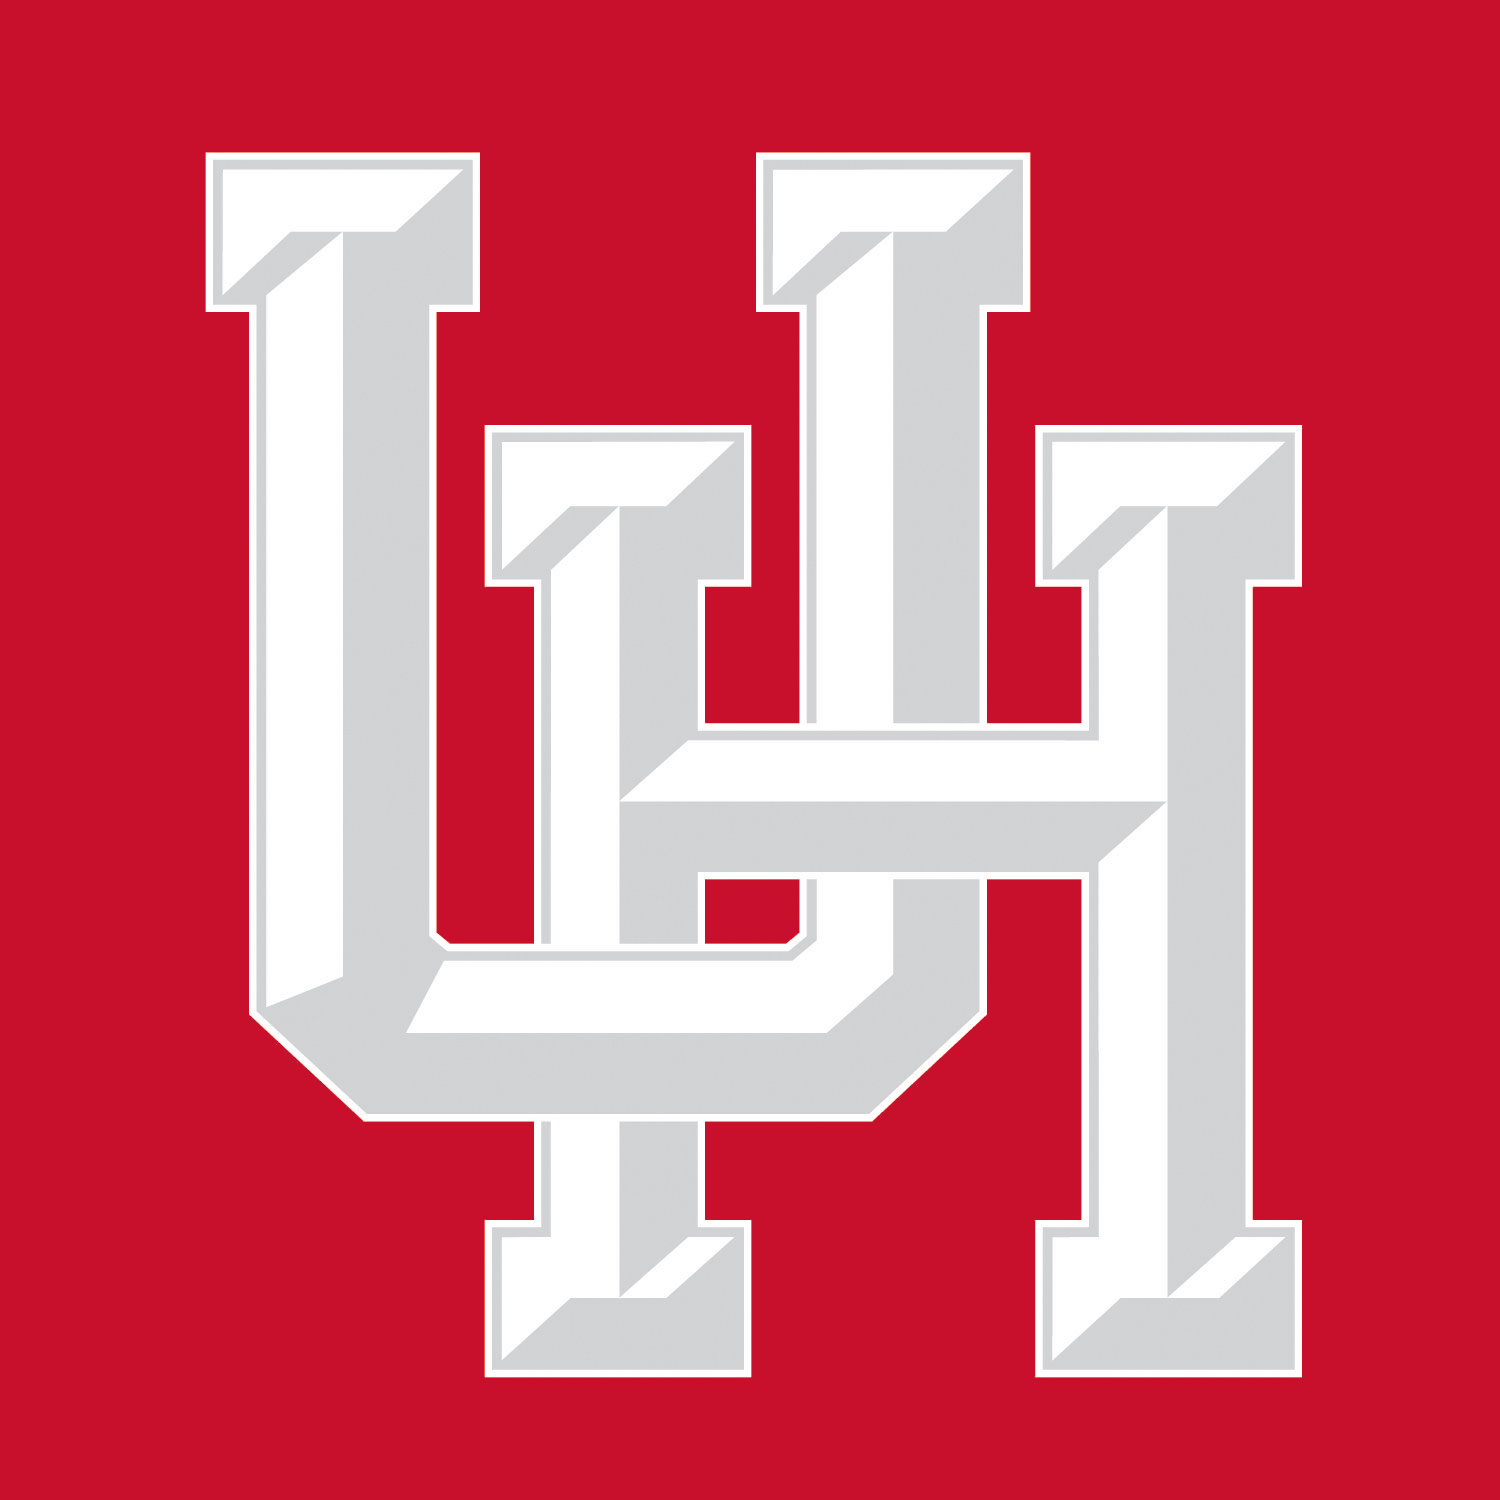 Houston Logo - File:Logo of the University of Houston.png - Wikimedia Commons